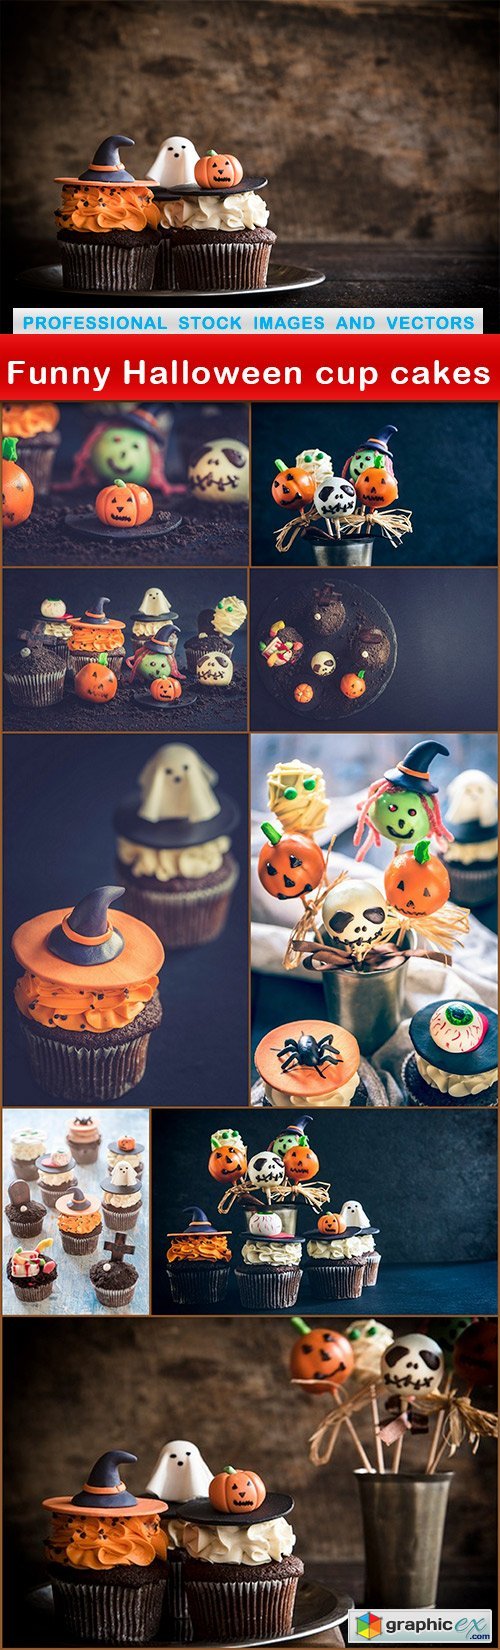 Funny Halloween cup cakes - 10 UHQ JPEG